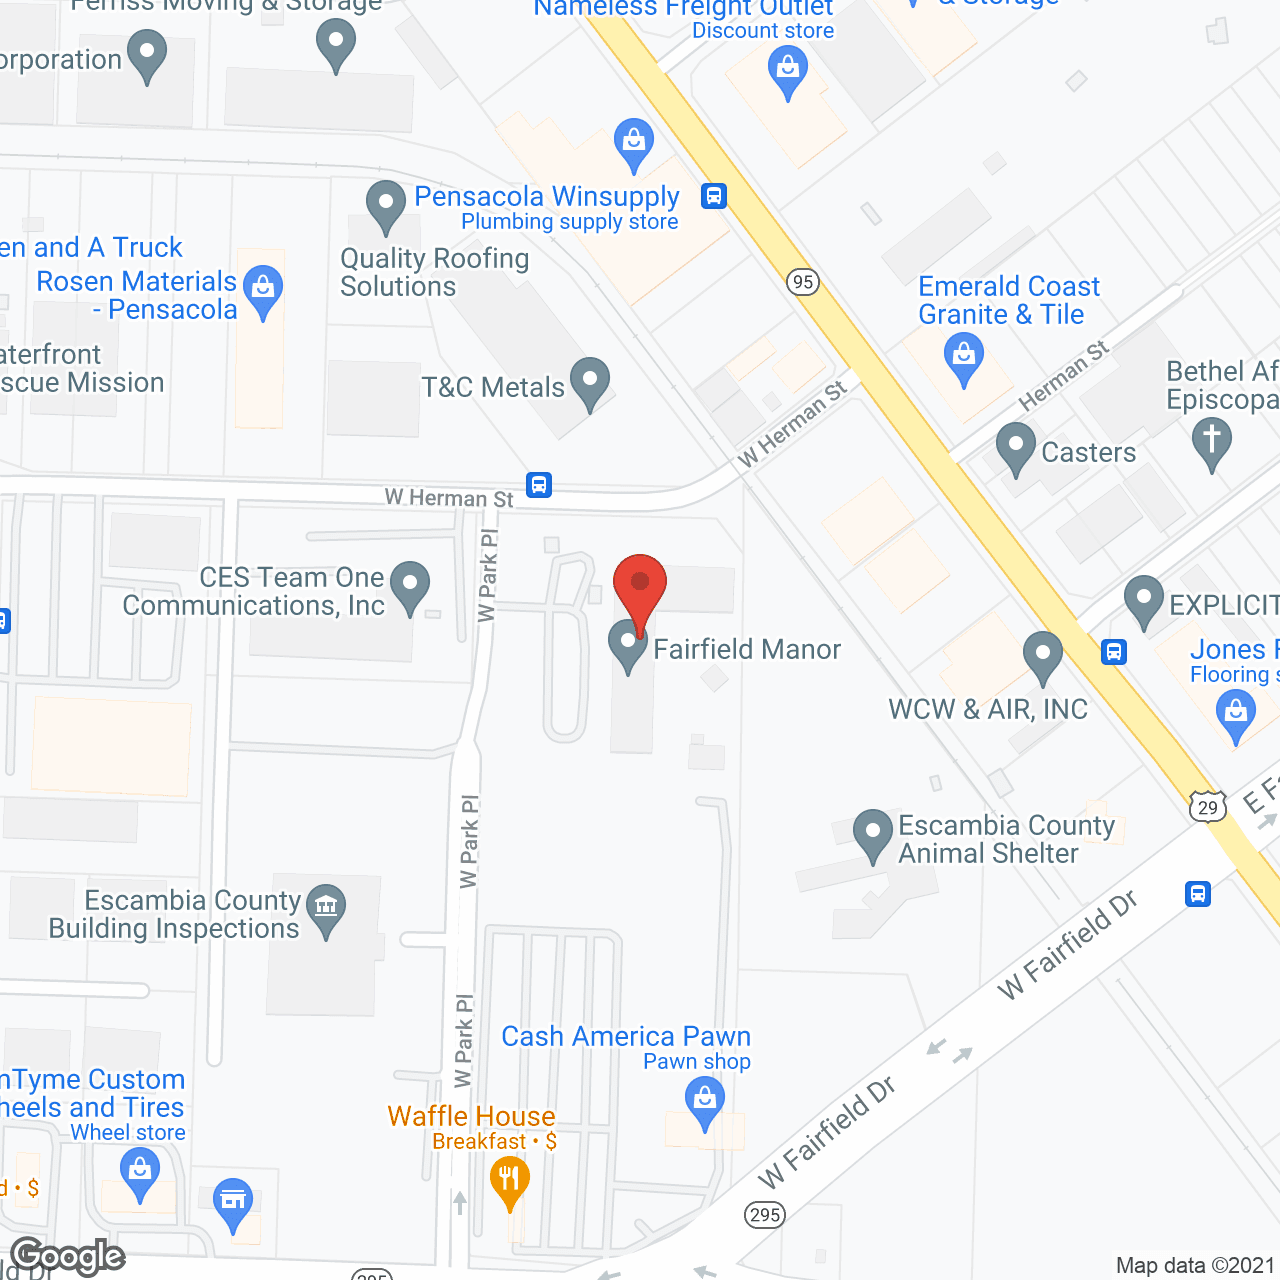 Fairfield Manor in google map